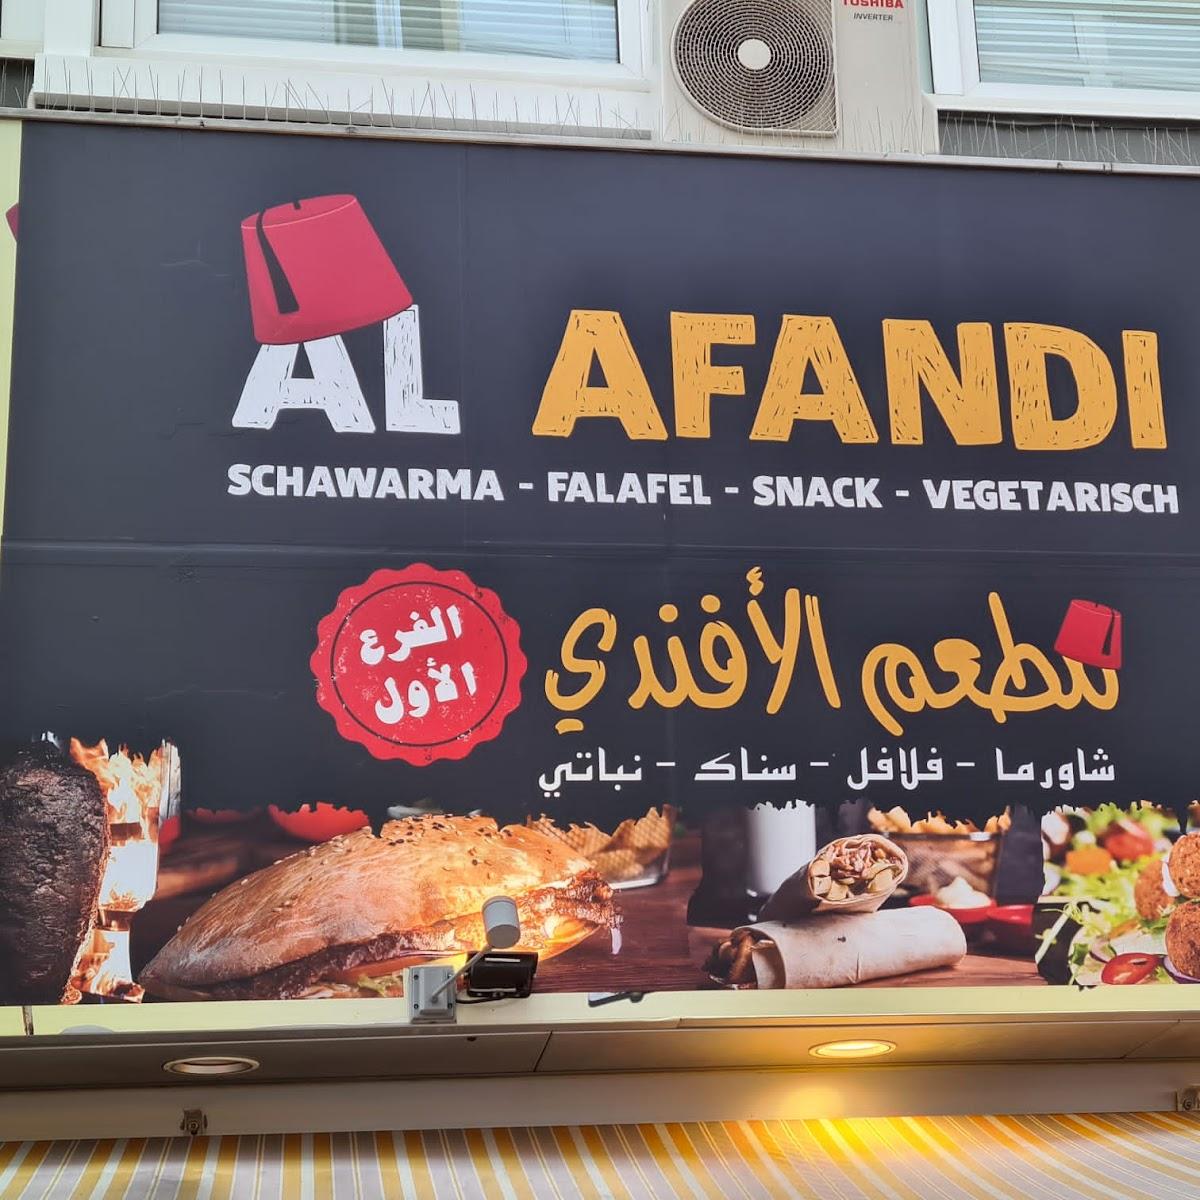 Restaurant "Al Afandi Restaurant (Shawarma, Falafel & Snack)" in Dortmund